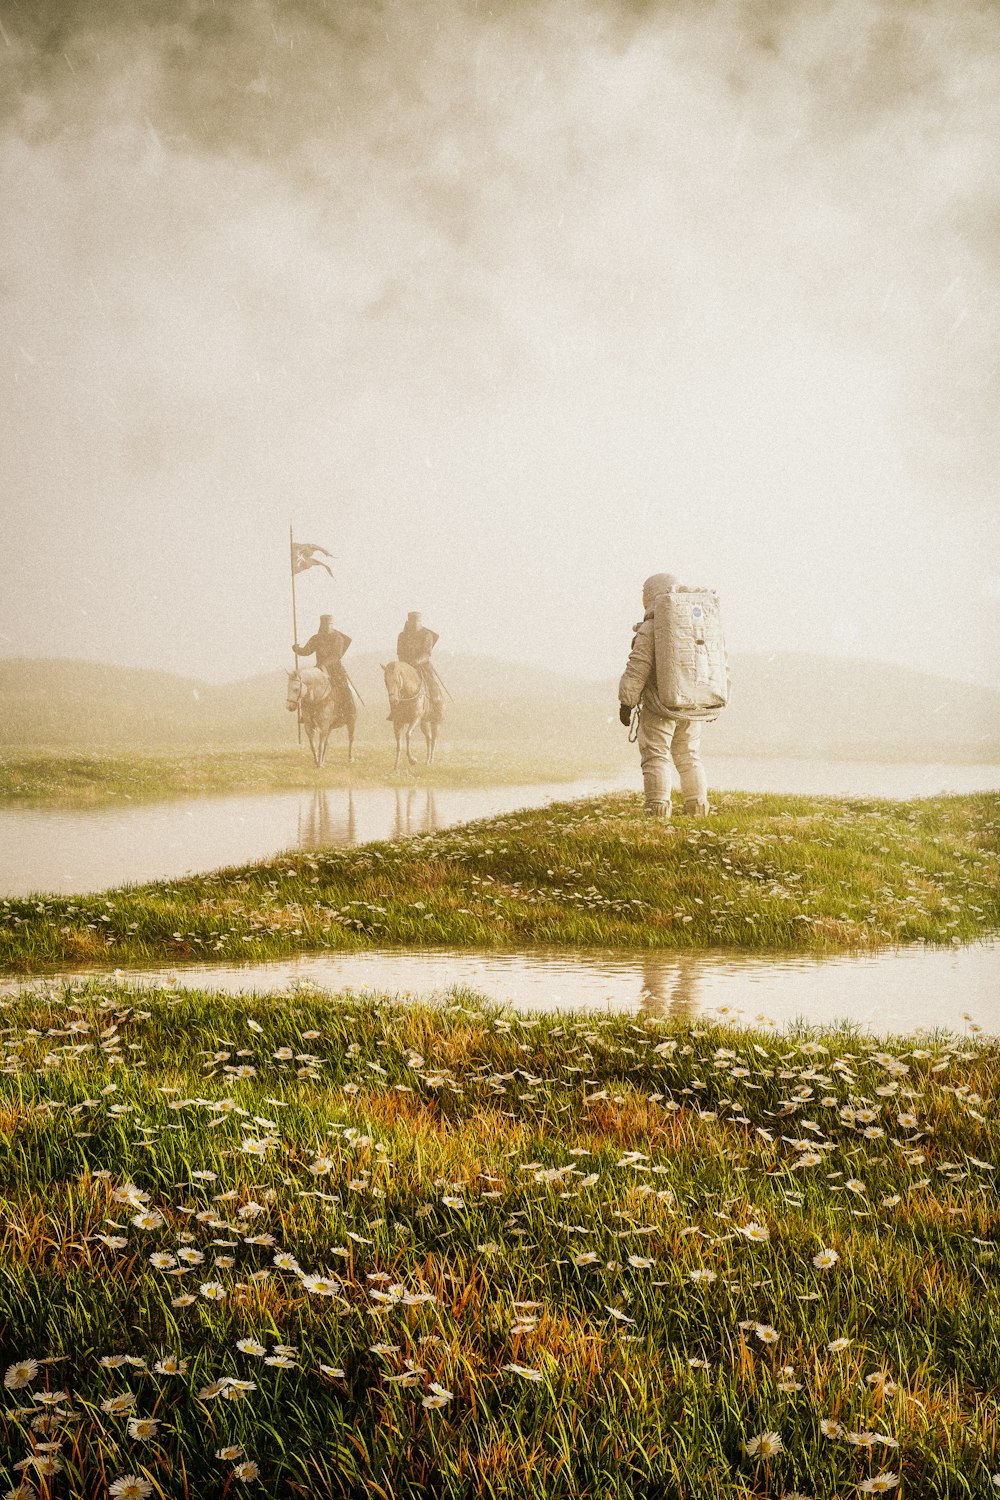 Un grupo de personas montando a caballo en un día de niebla